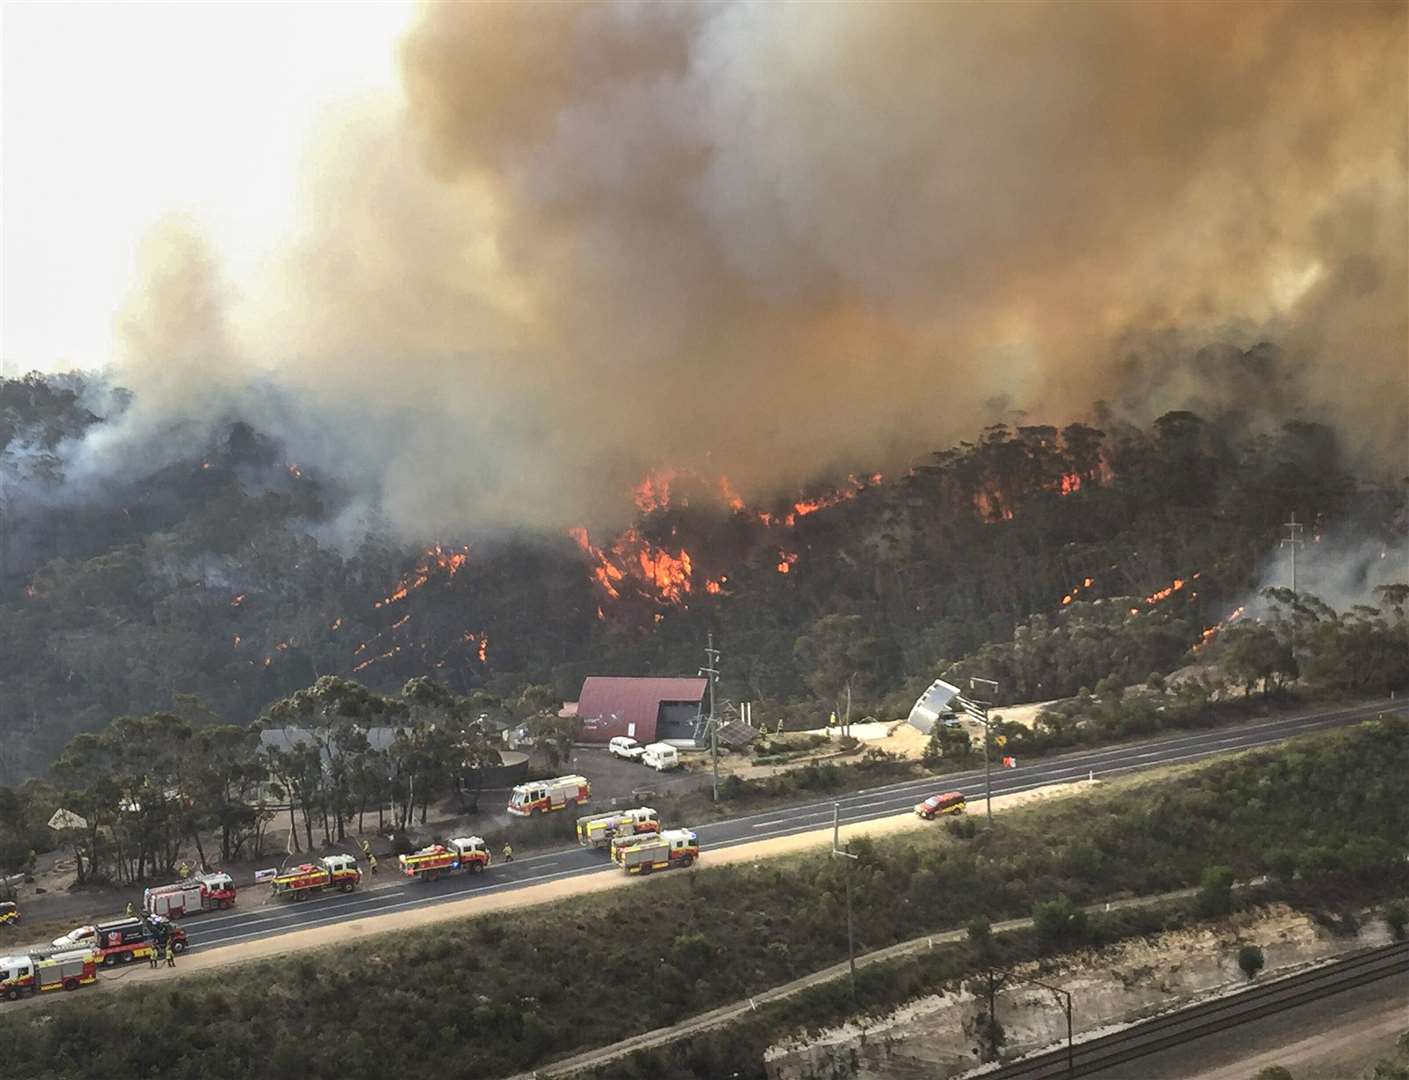 Australia is still lagging behind on tackling climate change despite devastating wildfires (CPOA Brett Kennedy/Commonwealth of Australia)